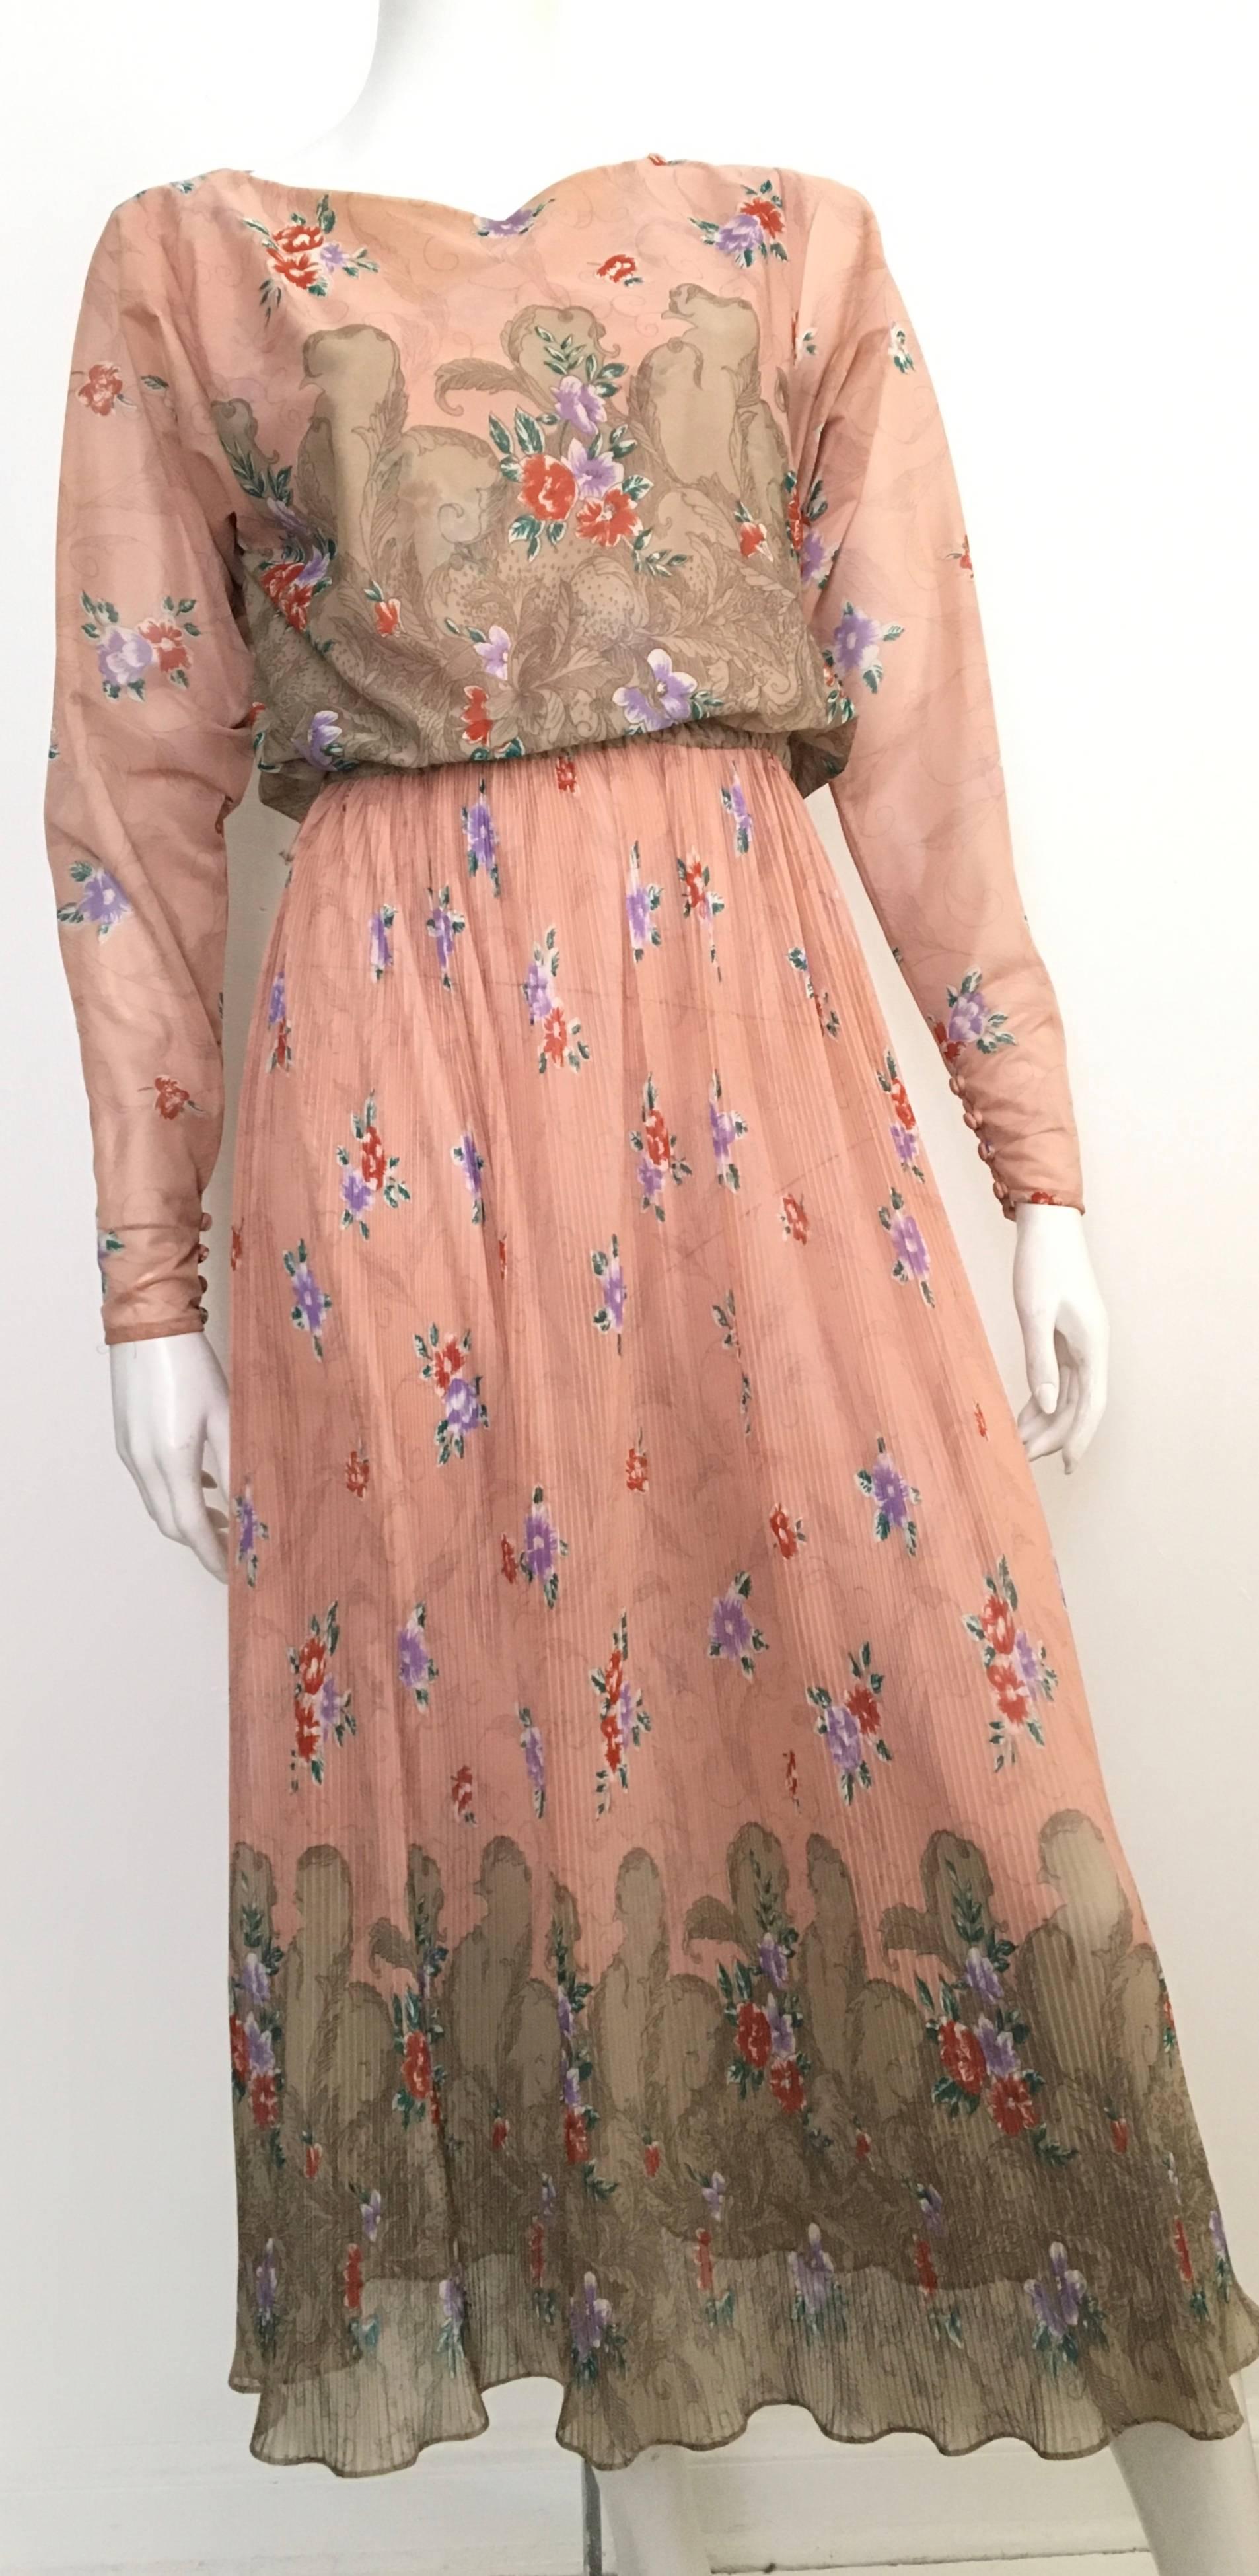 Neiman Marcus Floral Asian Dress Size 4  For Sale 2